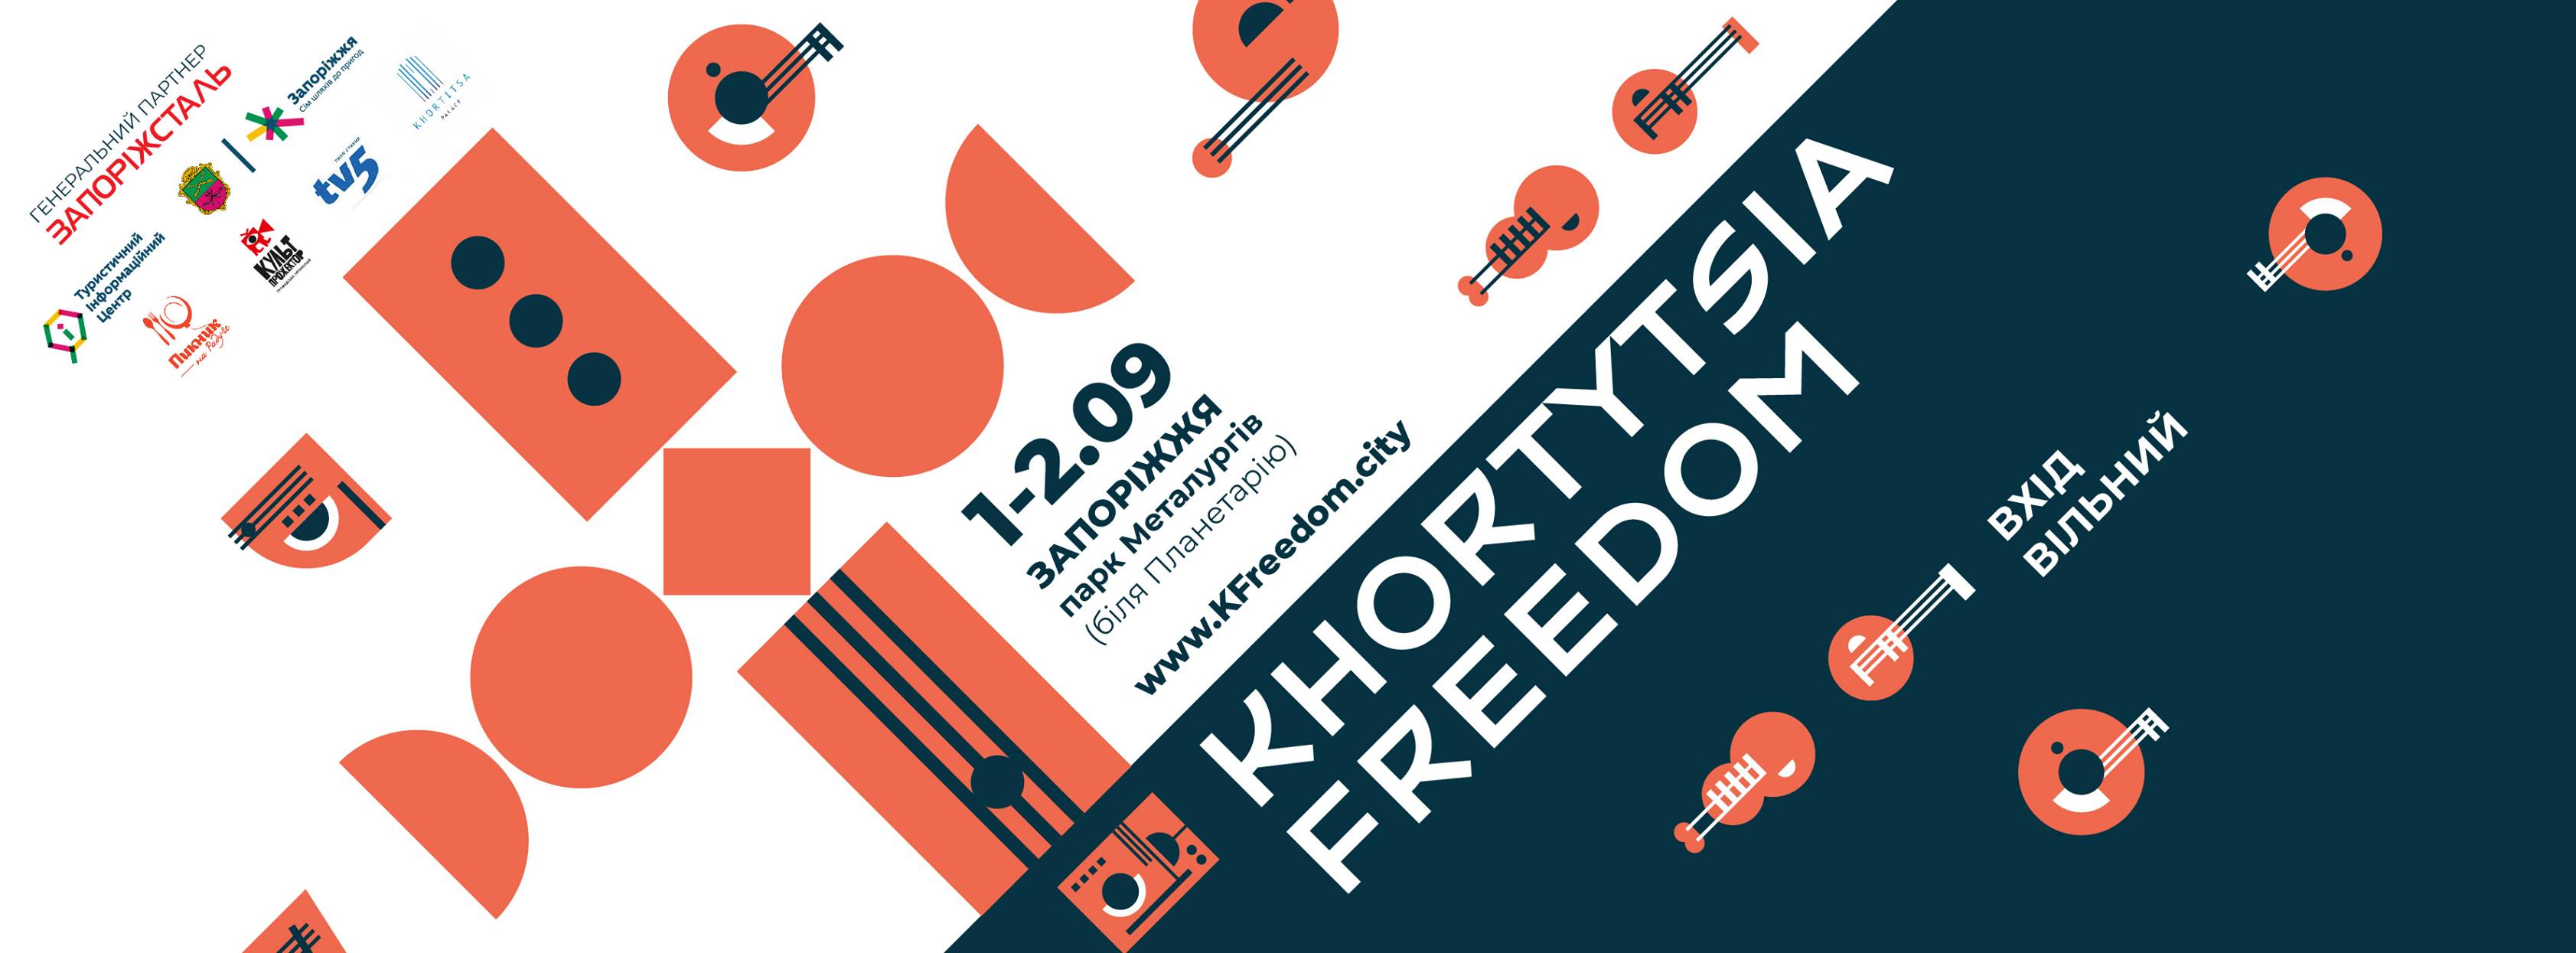 ONUKA, СКАЙ и Воплі Відоплясова: стала известна программа музыкального фестиваля «Khortytsia Freedom»